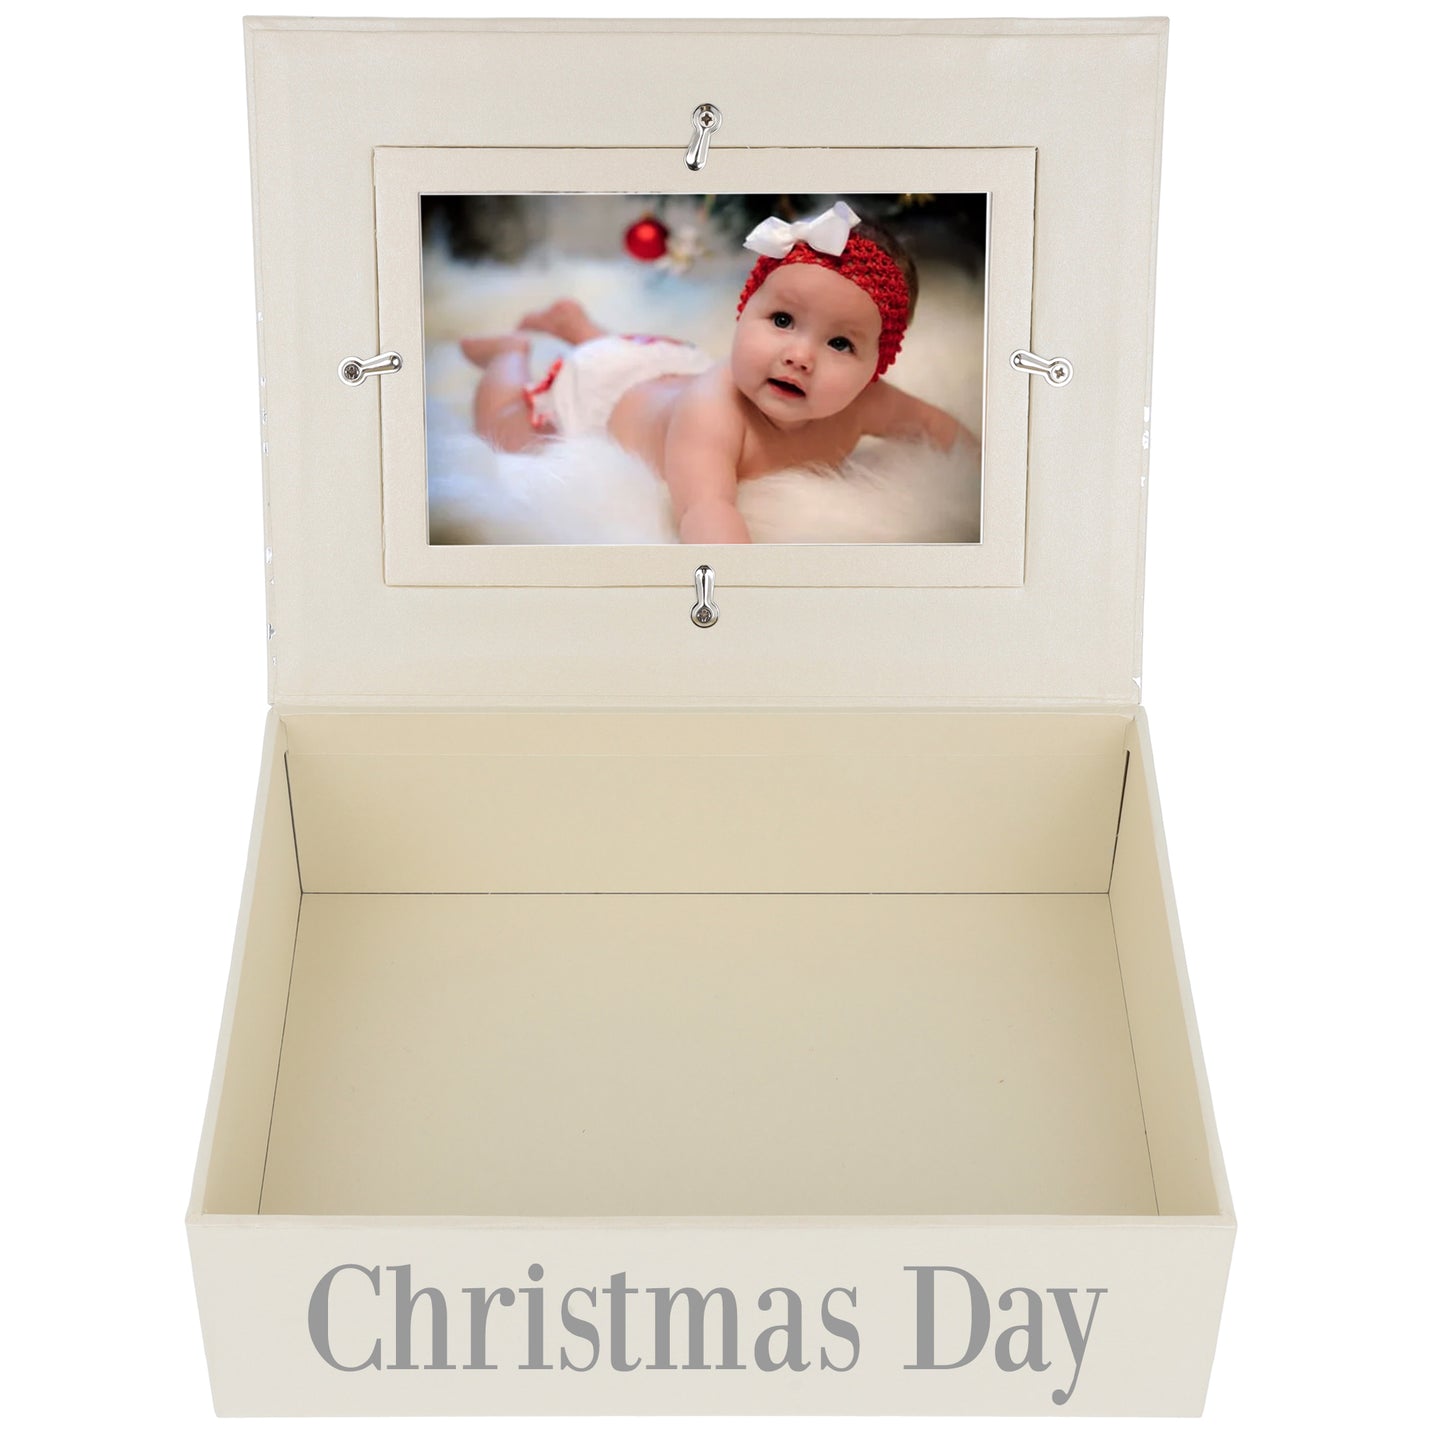 Personalised Christmas Keepsake Memory Baby Box and Photo Frame  - Always Looking Good -   